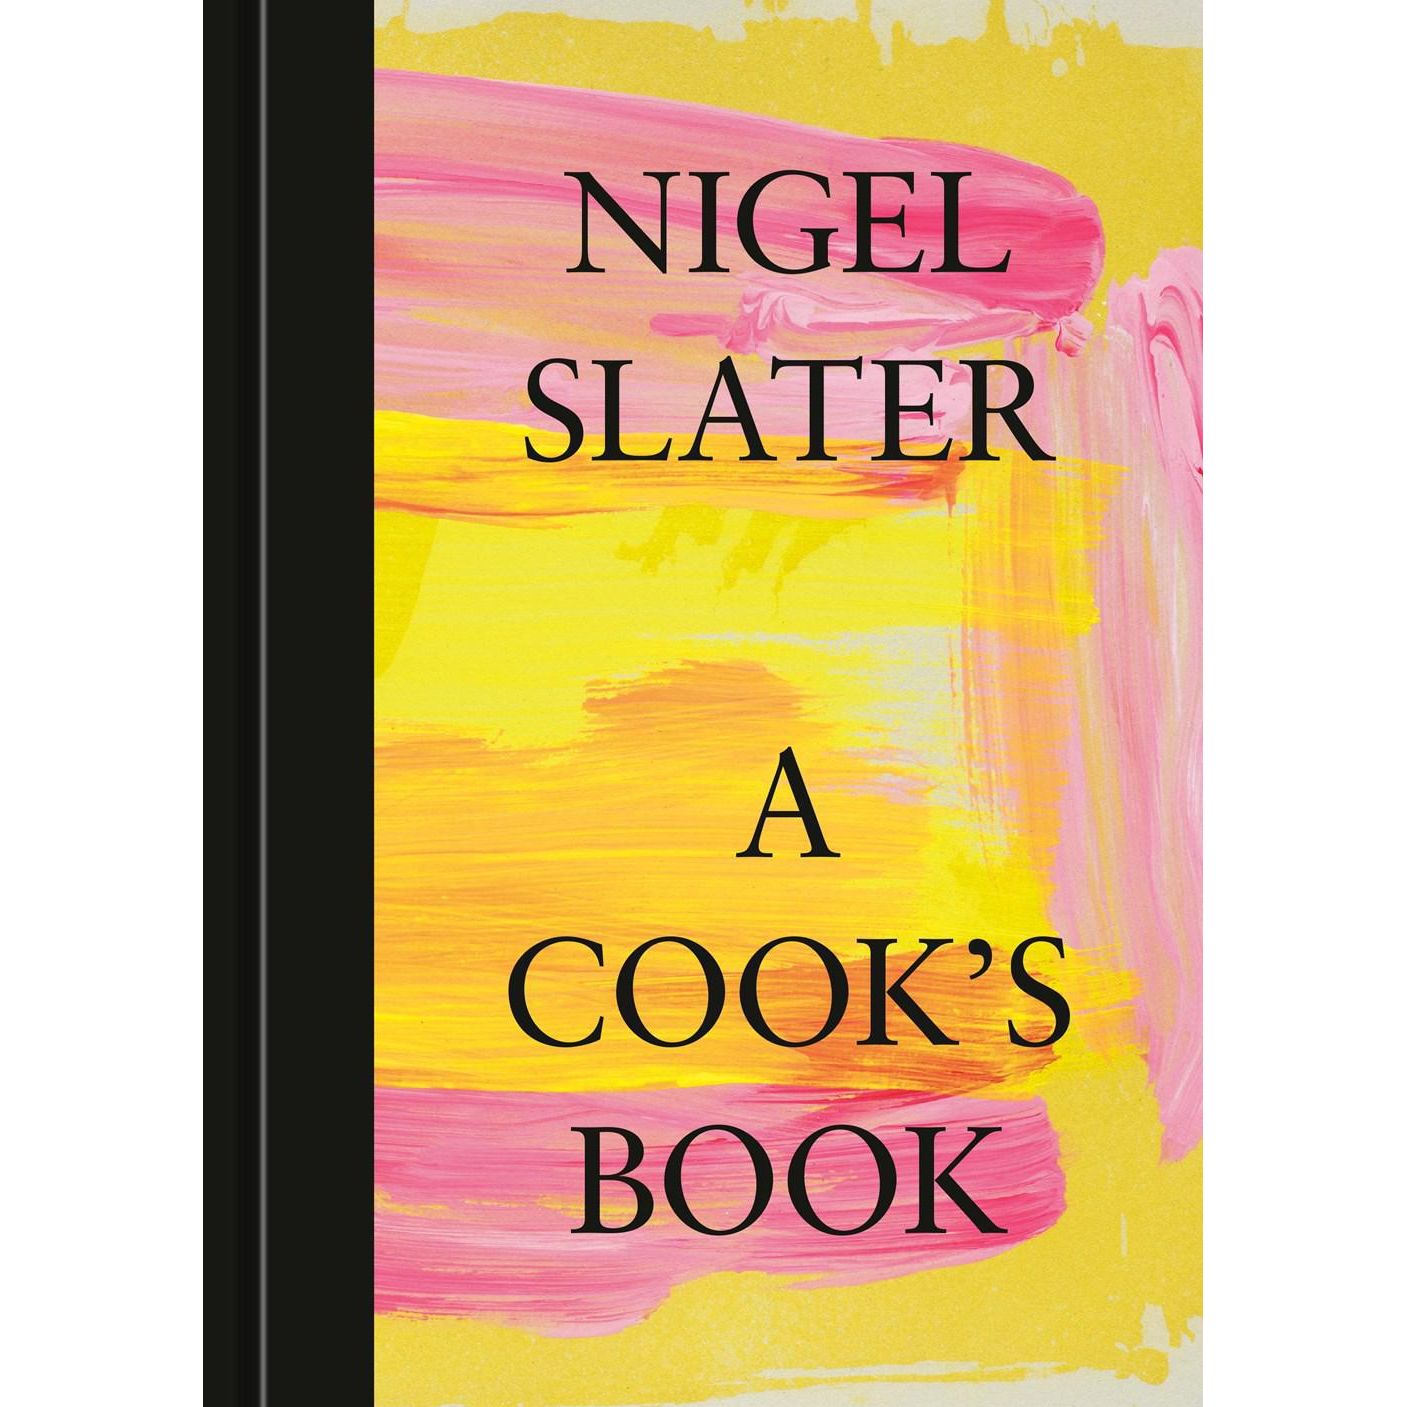 A Cook's Book (Nigel Slater)